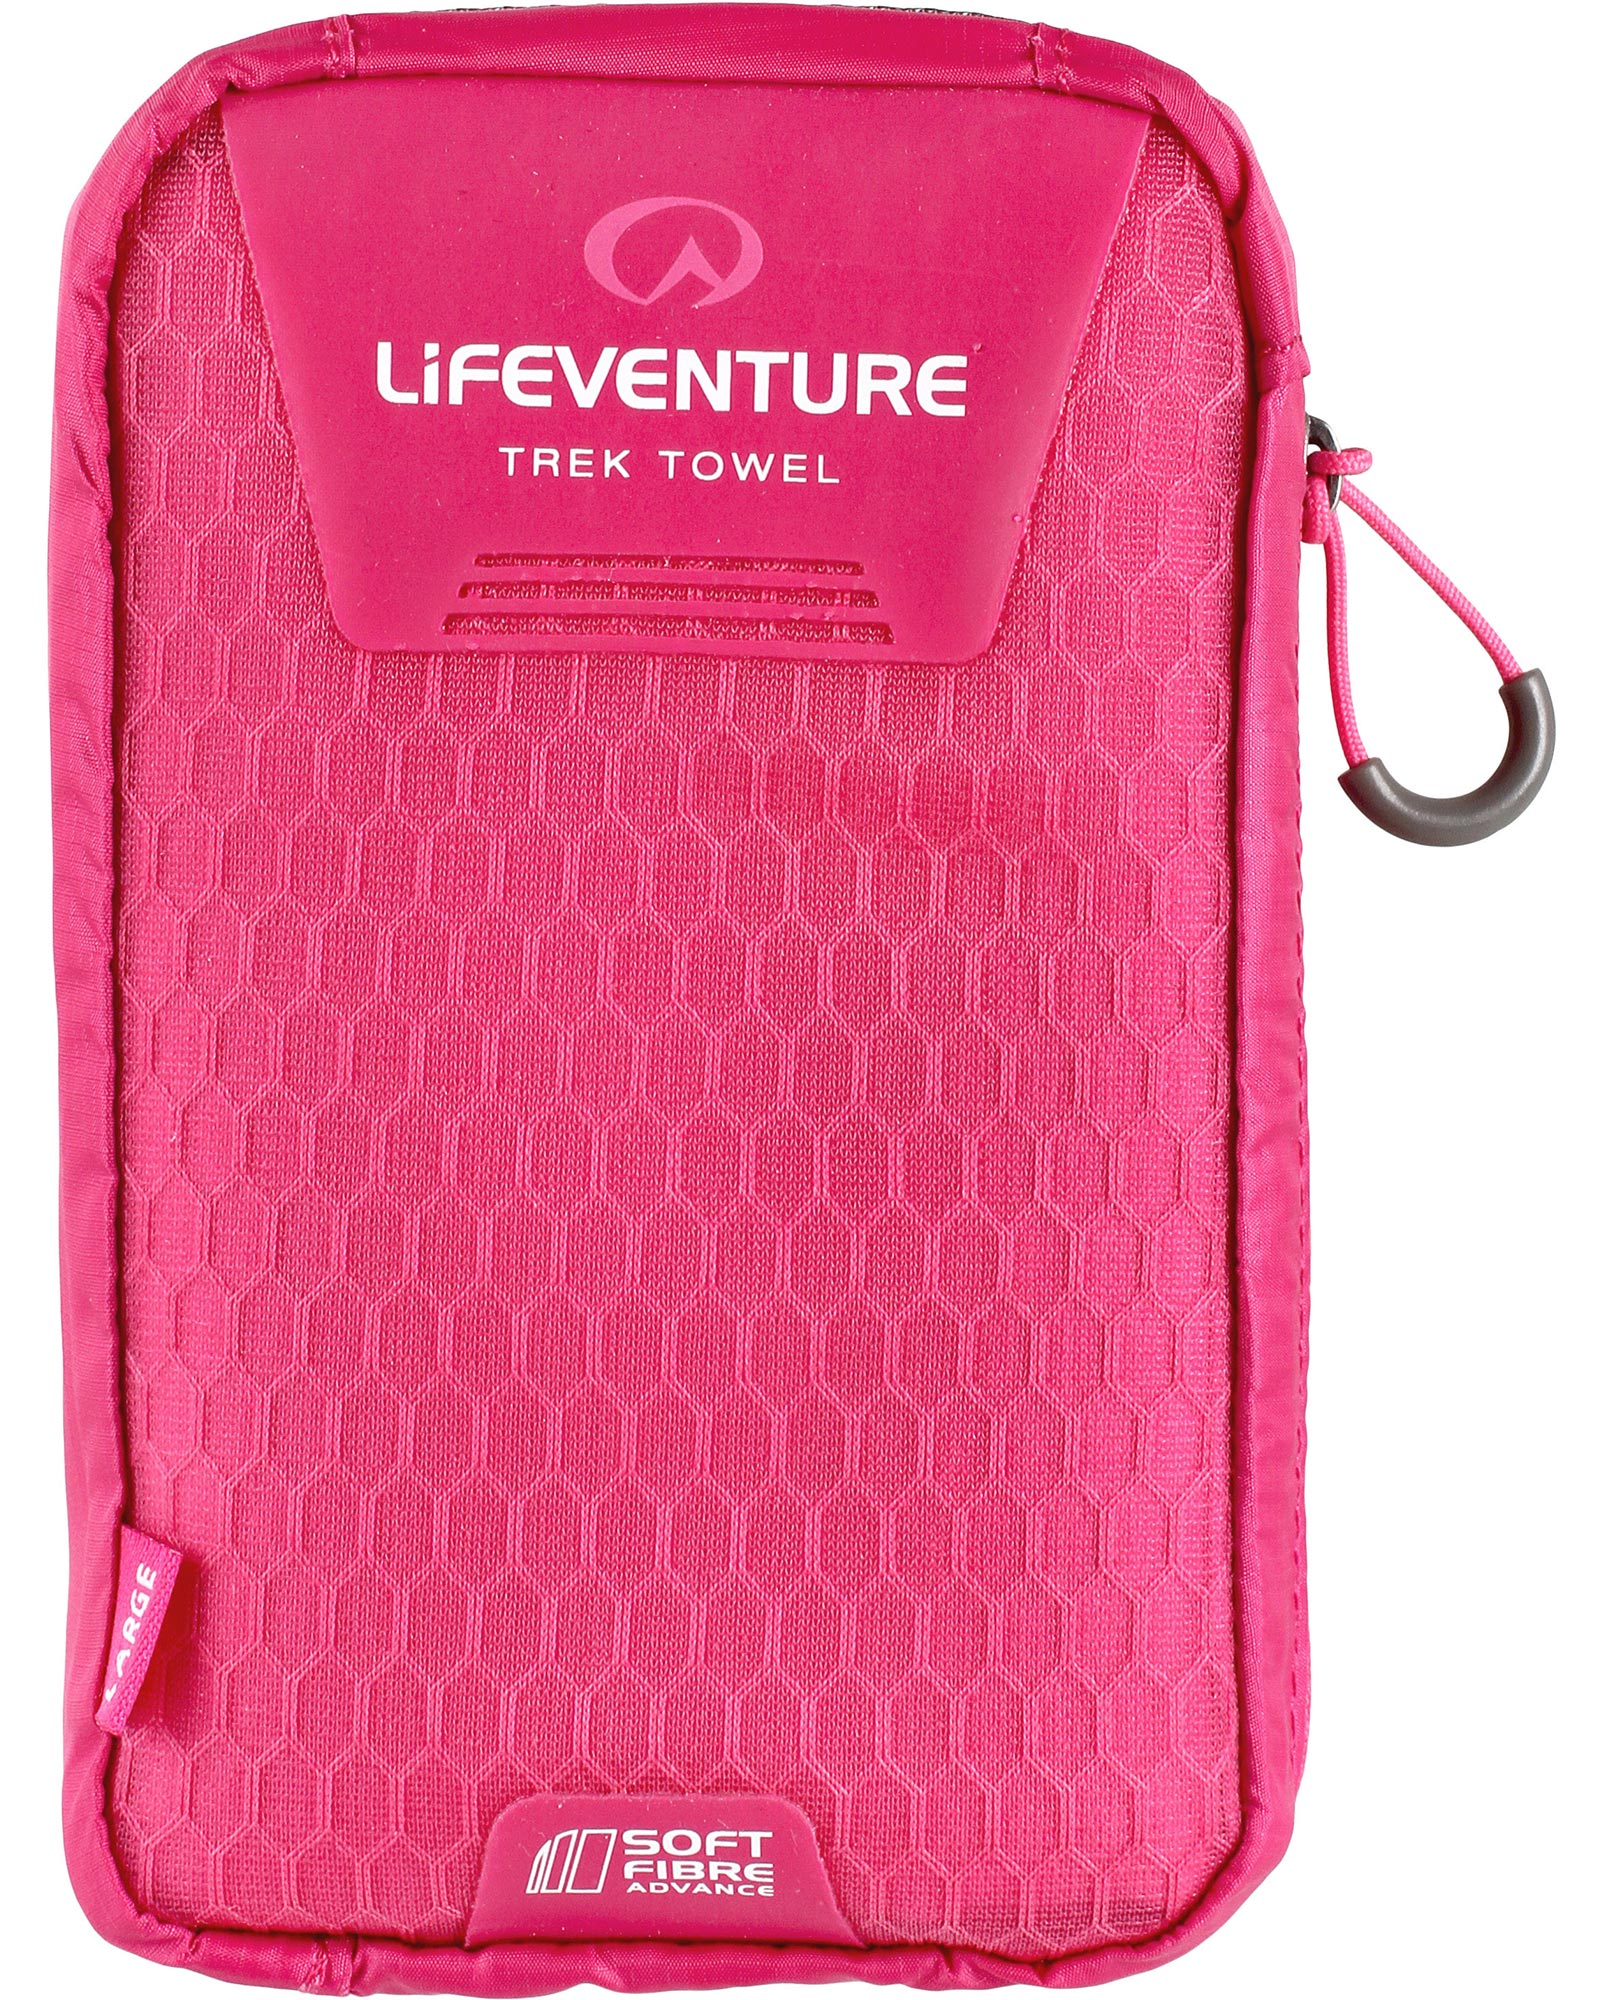 Lifeventure Soft Fibre Trek Towel - Large